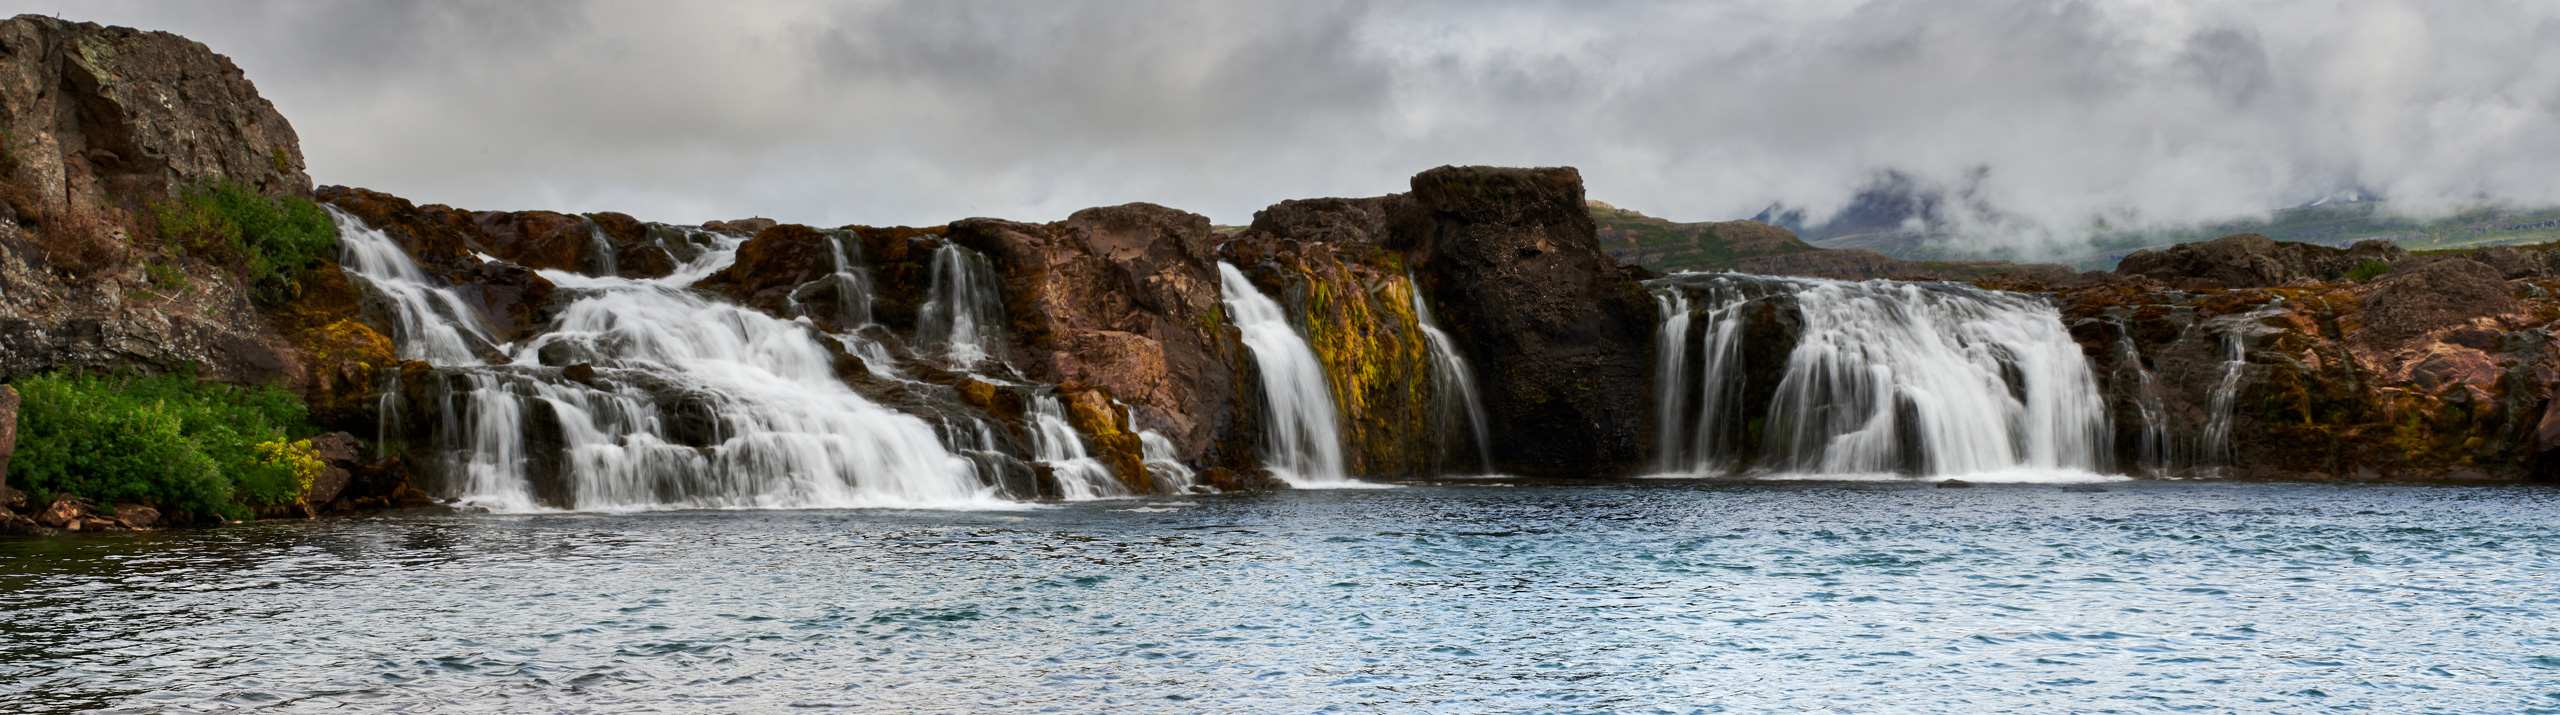 Beljandi vandfaldet - vandfald i Island